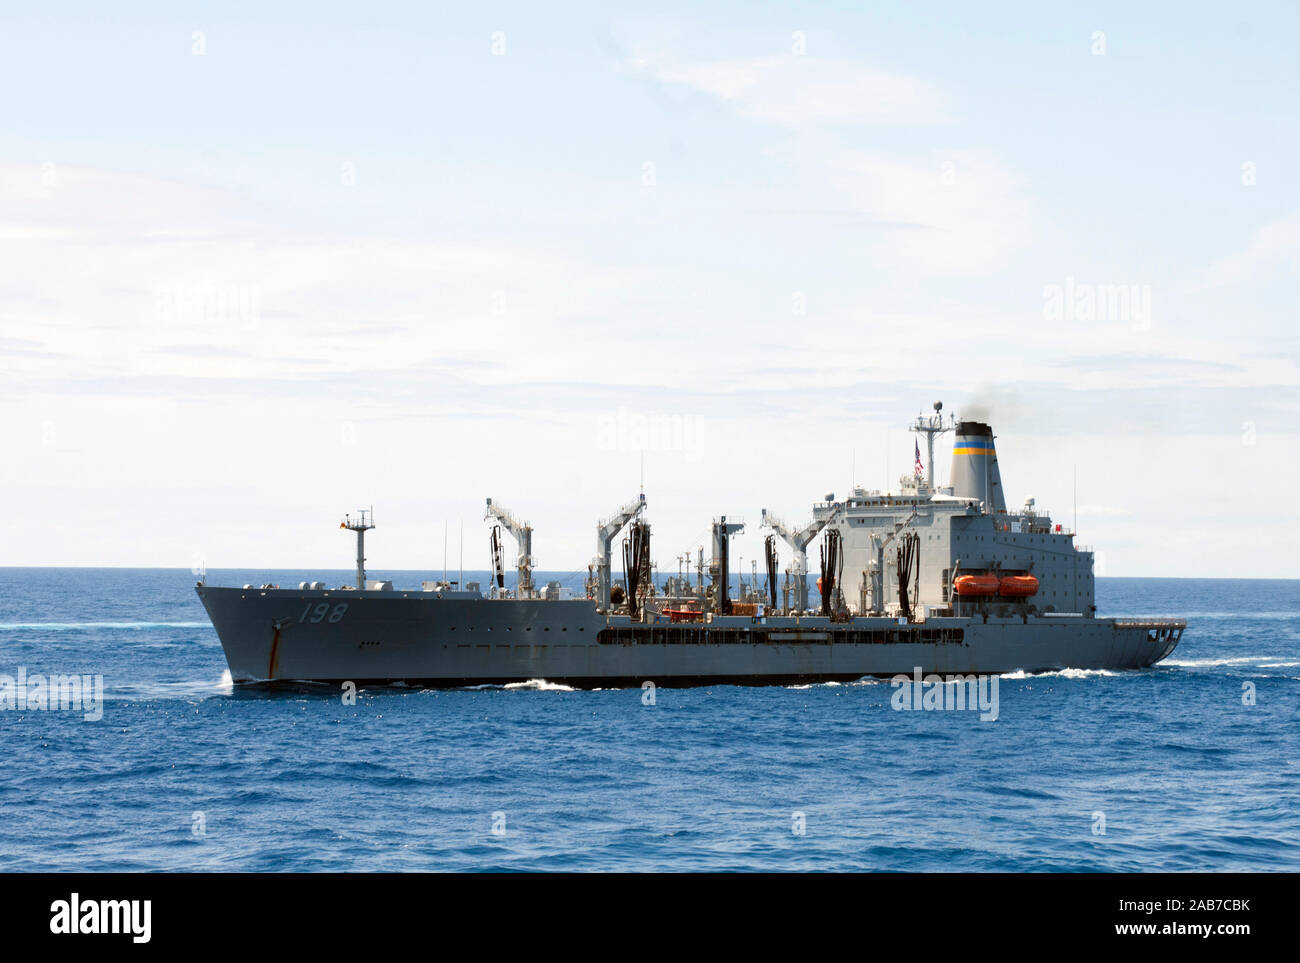 (26 de junio de 2012) El comando de Transporte Marítimo Militar lubricador de reposición de flota USNS Big Horn (T-AO 198) se está llevando a cabo con Carrier Strike Group (CSG) 8. Foto de stock